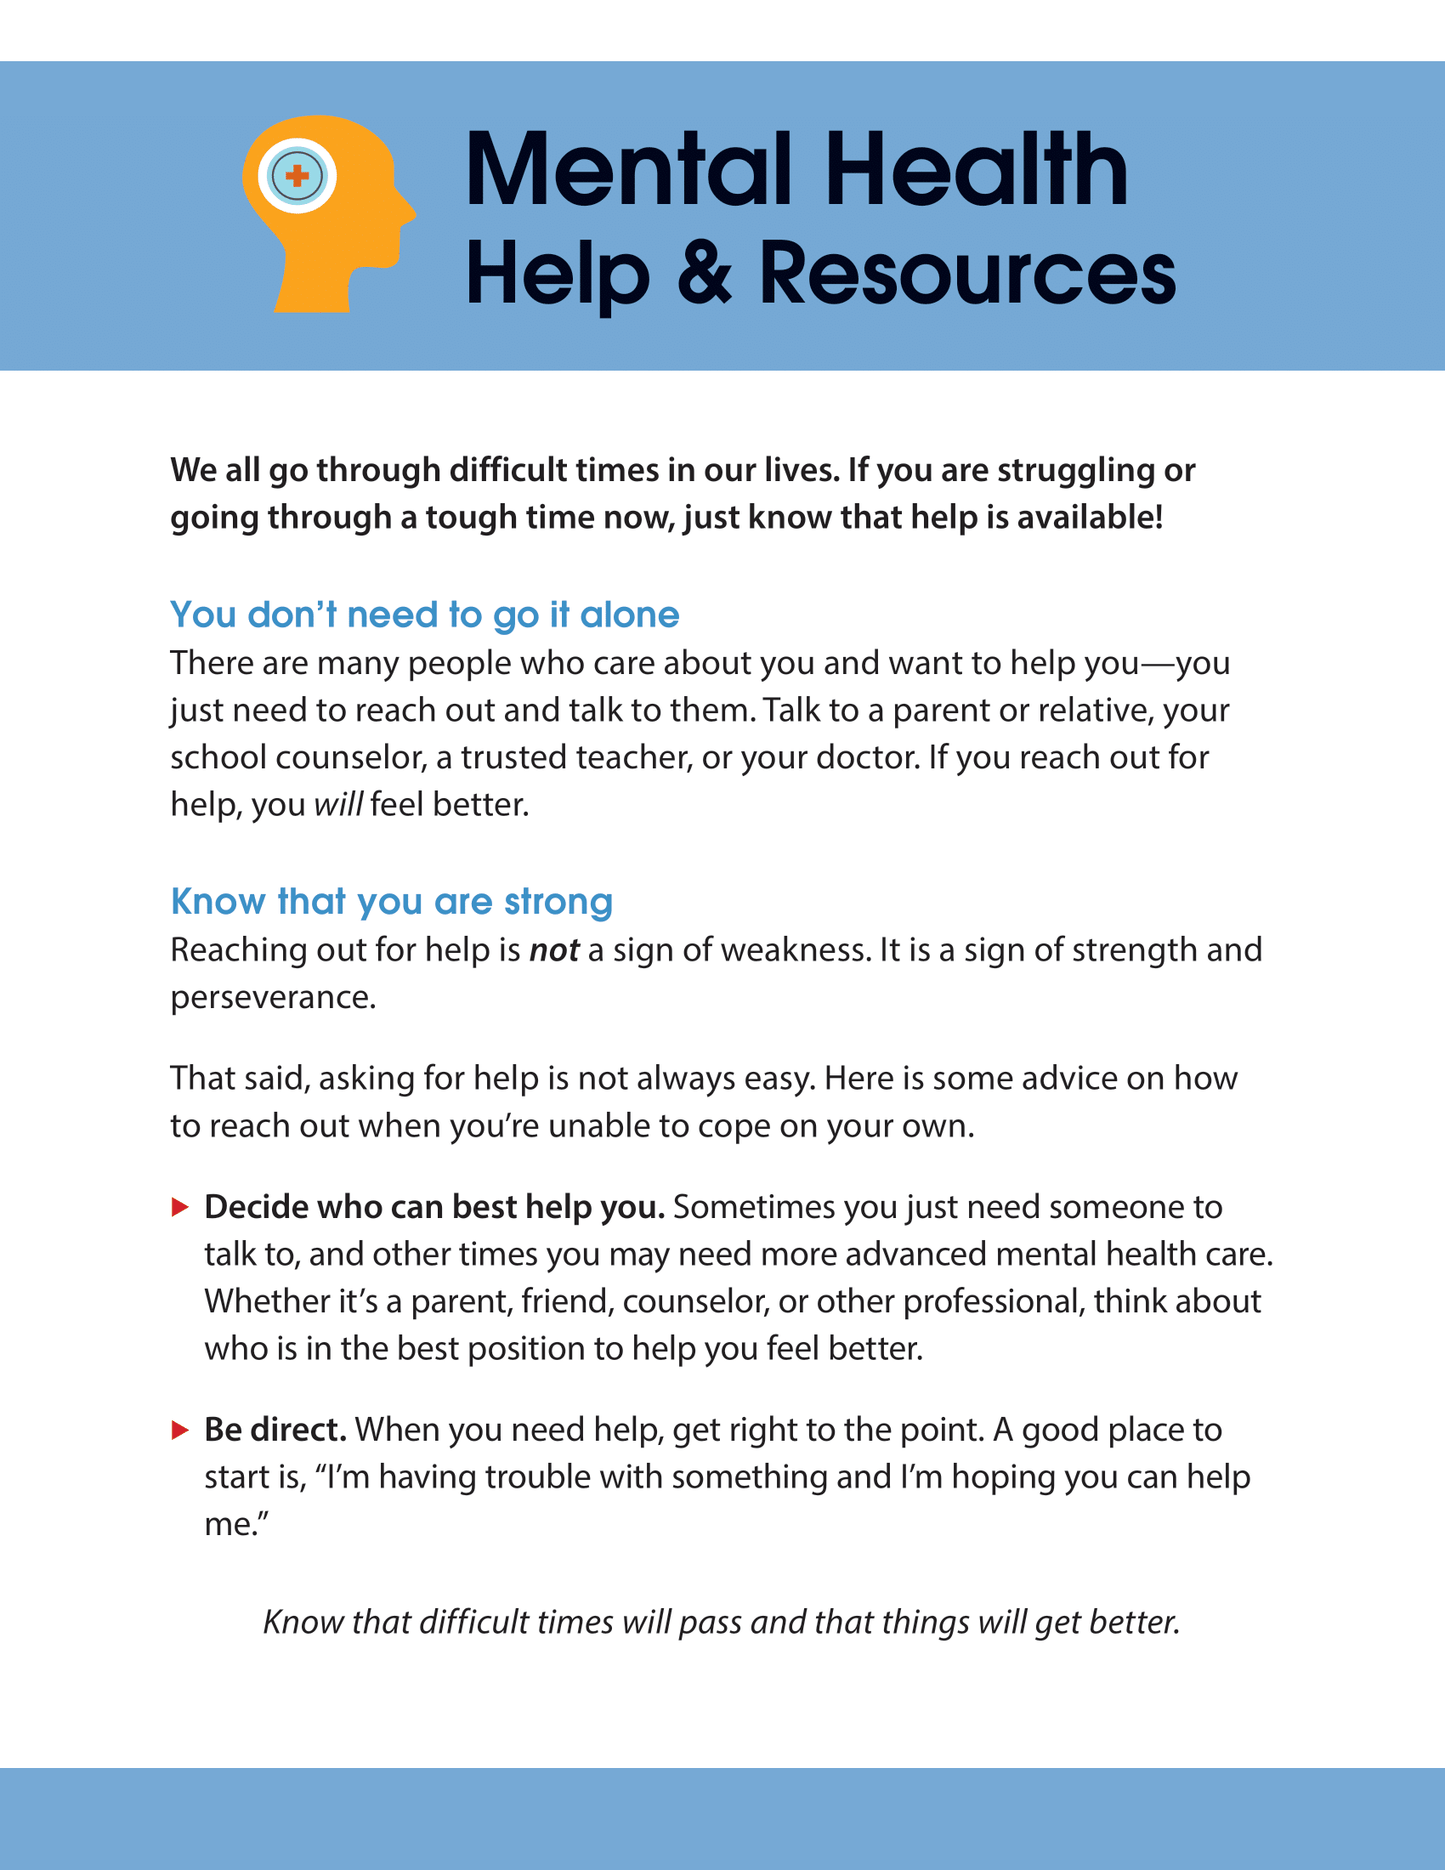 Mental Health Help & Resources